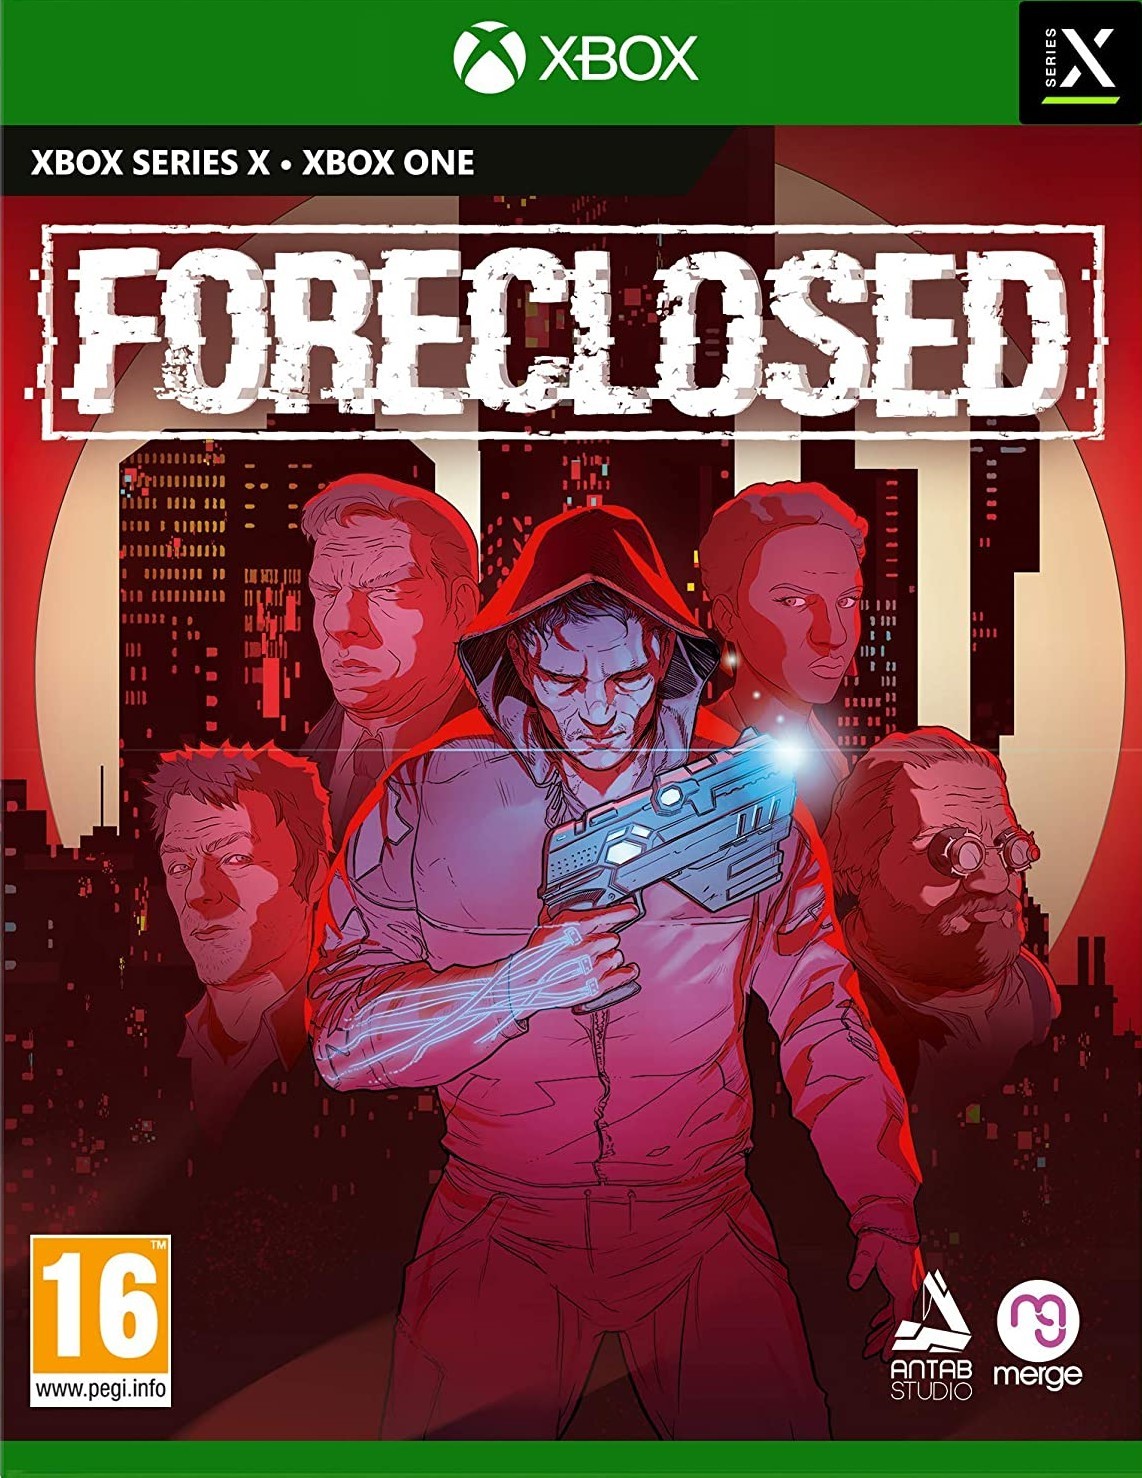 Foreclosed (Xbox Series X), Antab Studio